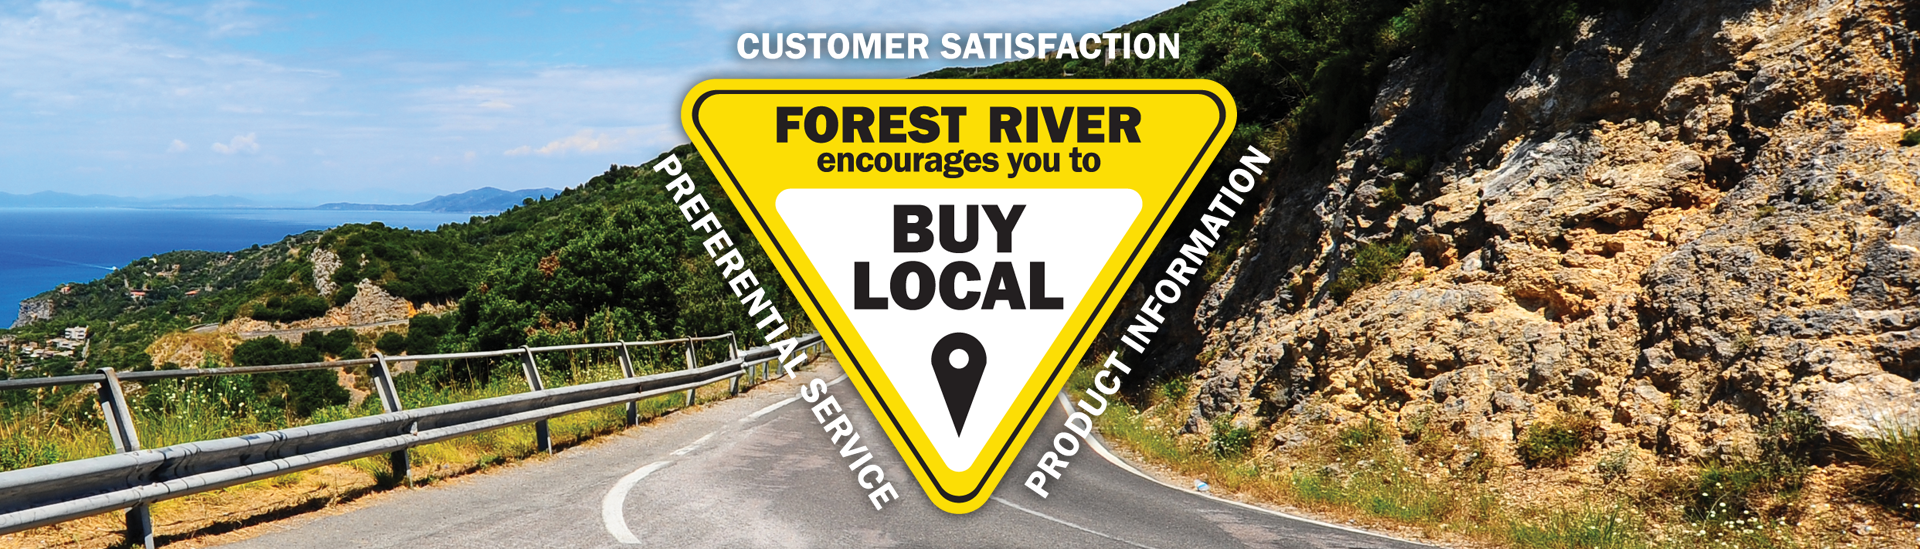 Forest River鼓励你购买本地产品:客户满意度、优待服务、产品资讯